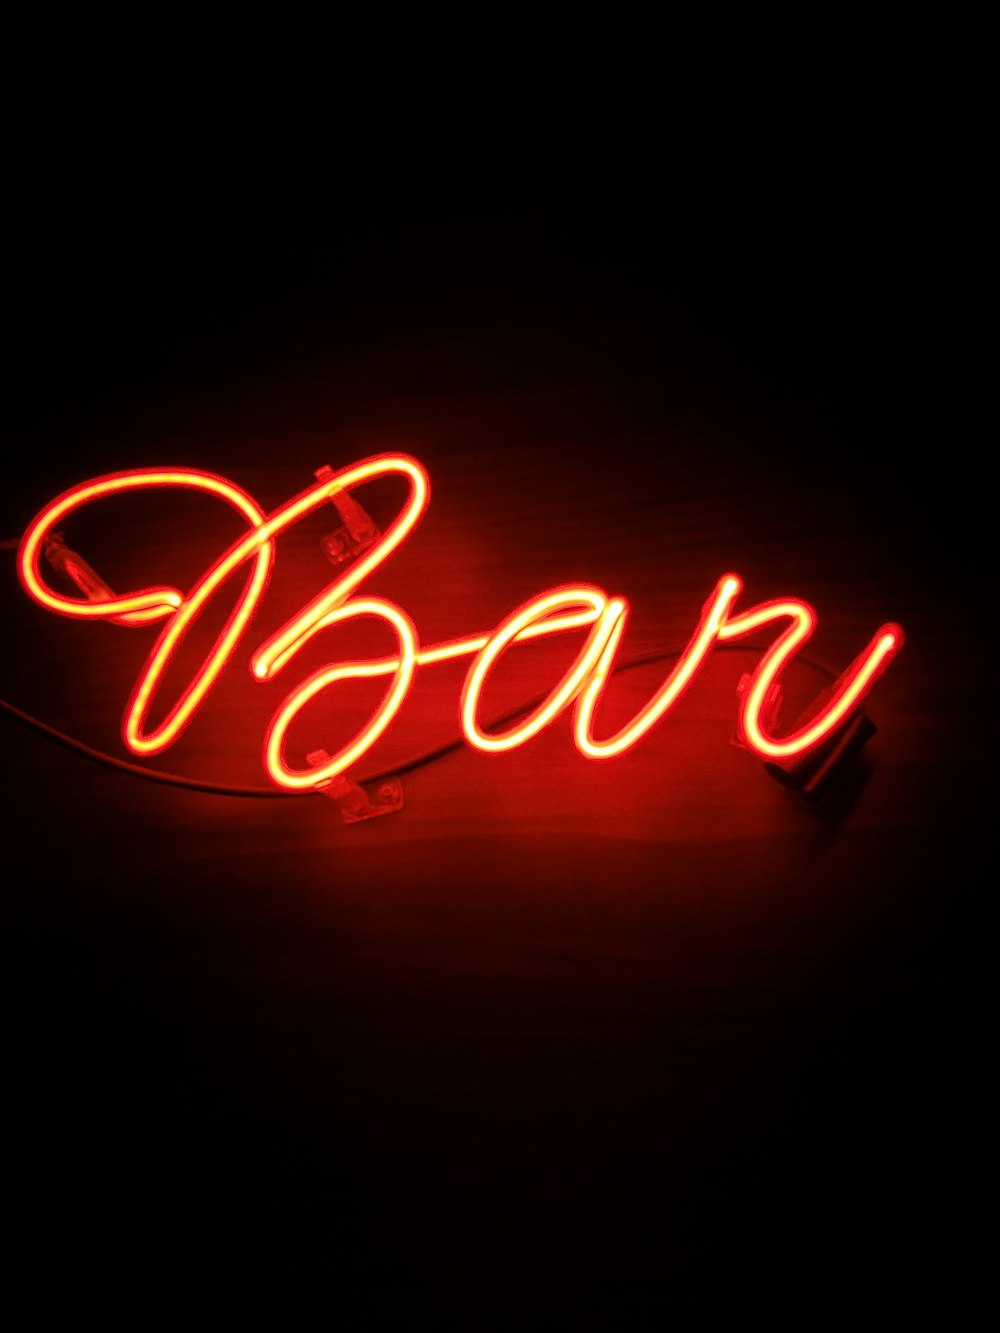 red bar neon sign photo – Free Light Image on Unsplash